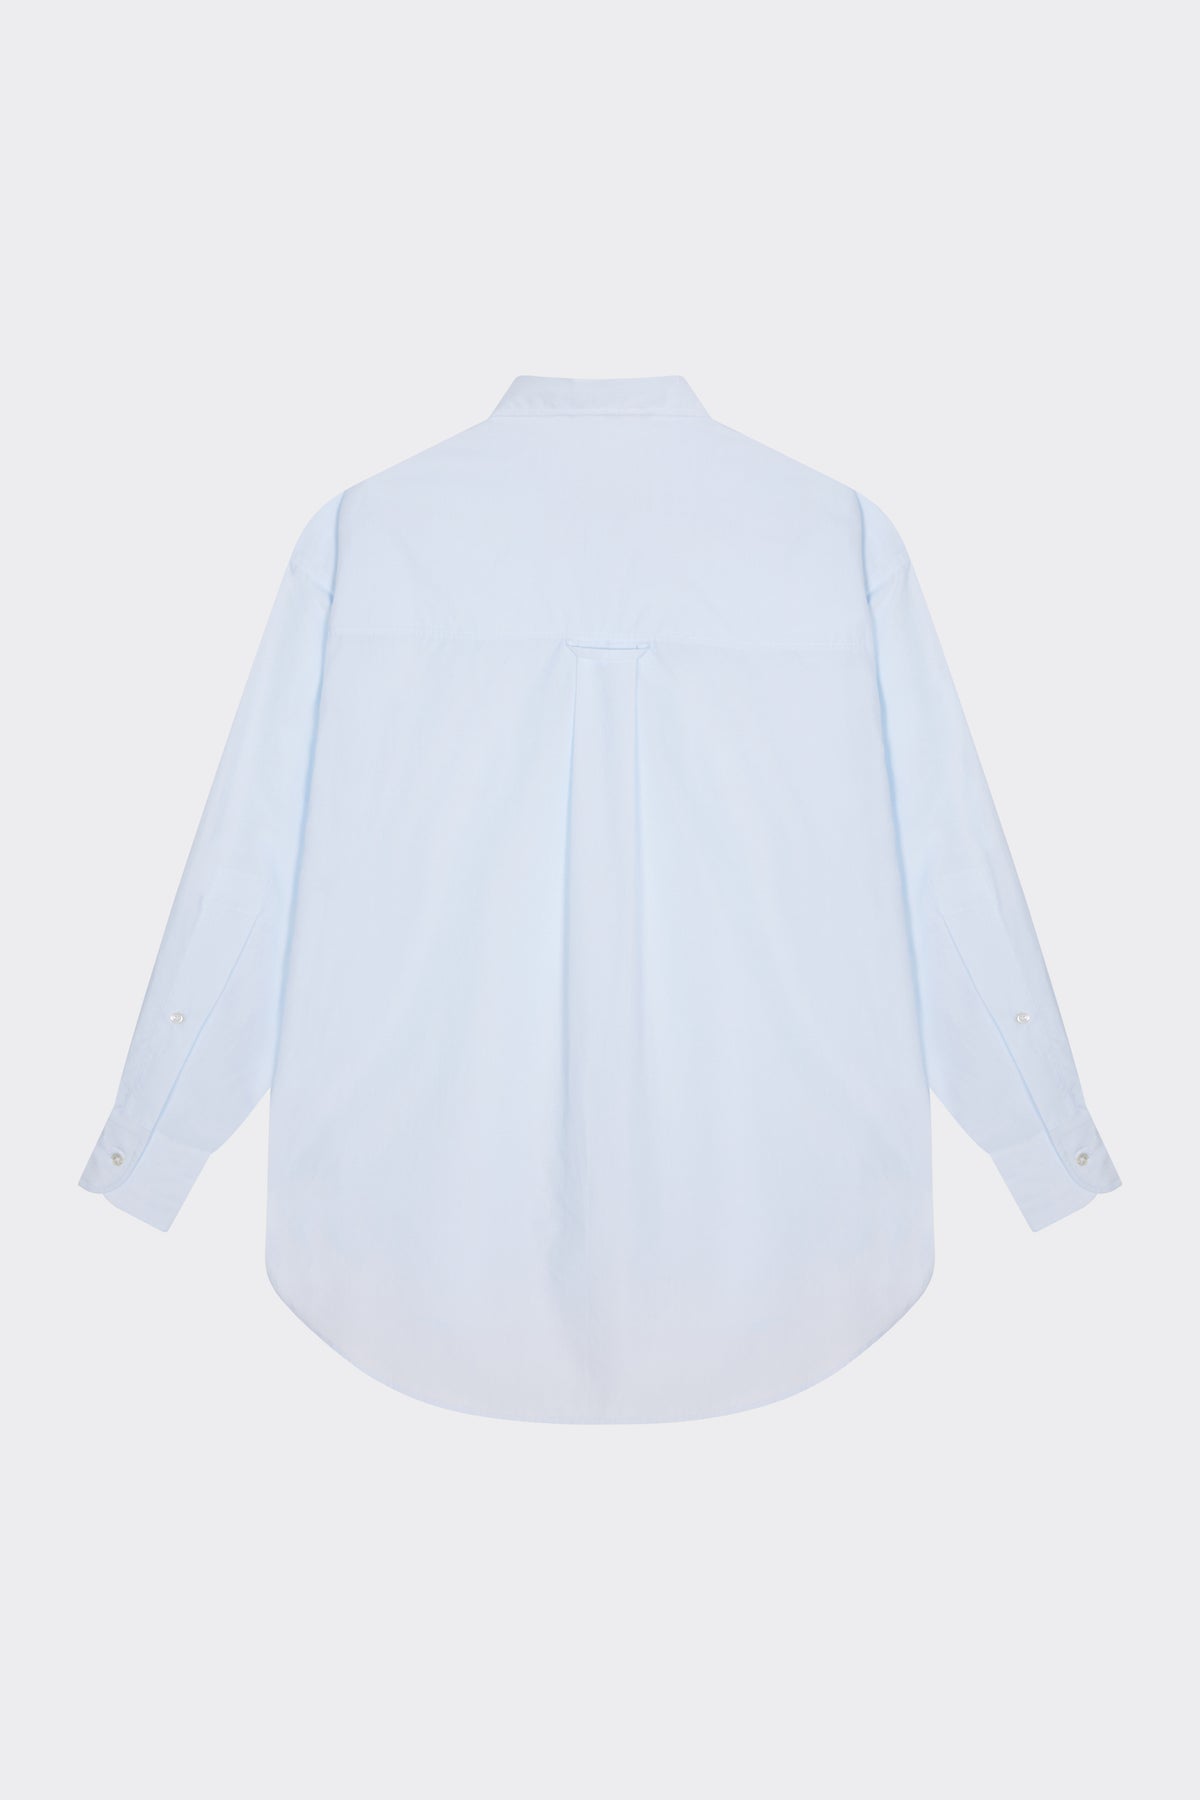 Effia Shirt in Pale Blue| Noon by Noor